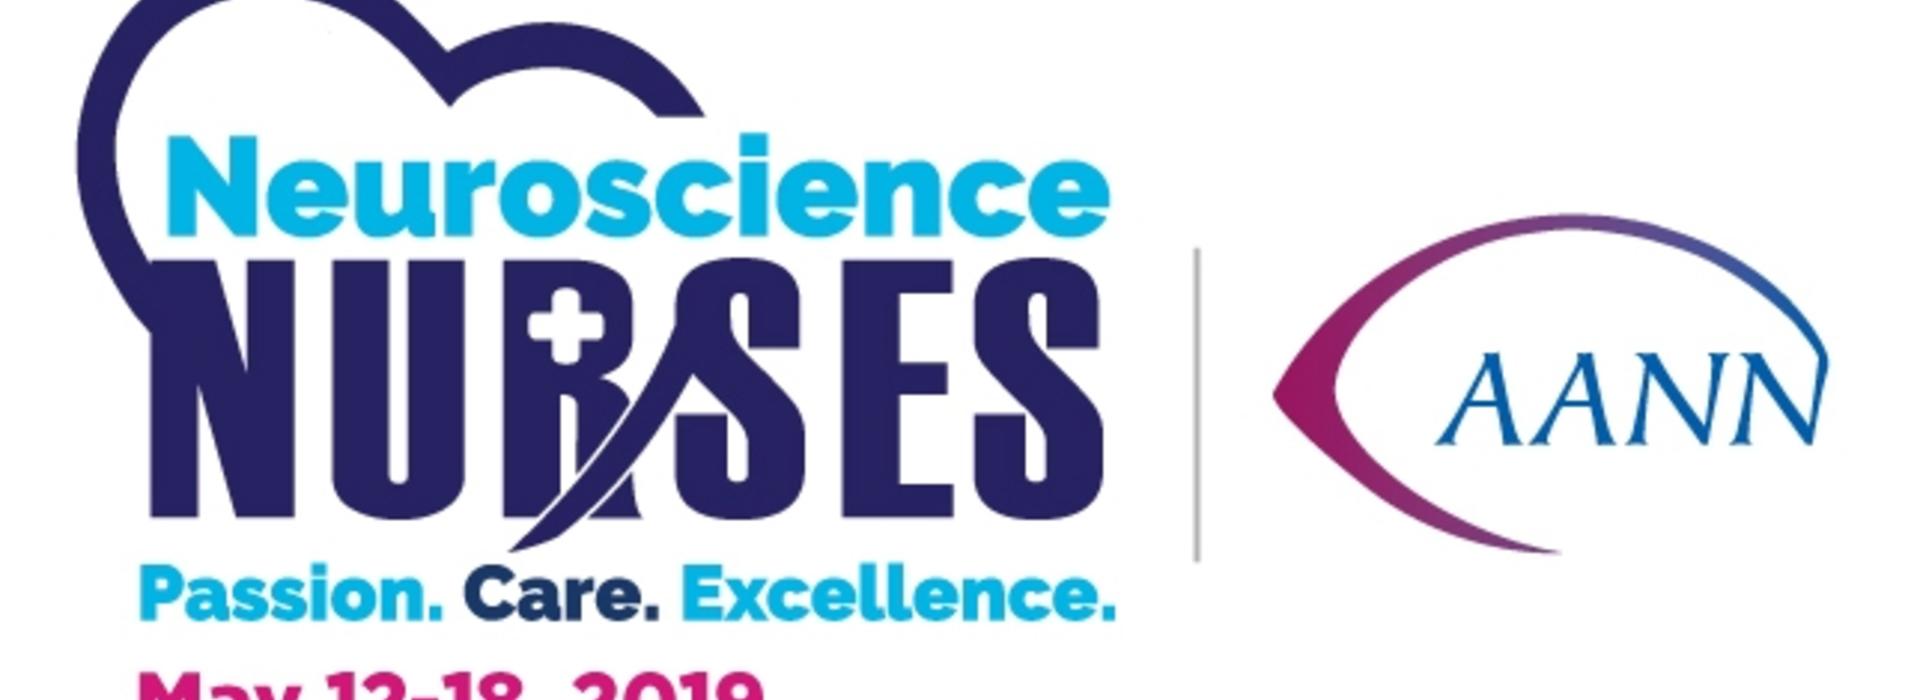 Neuroscience Nursing Week Logo